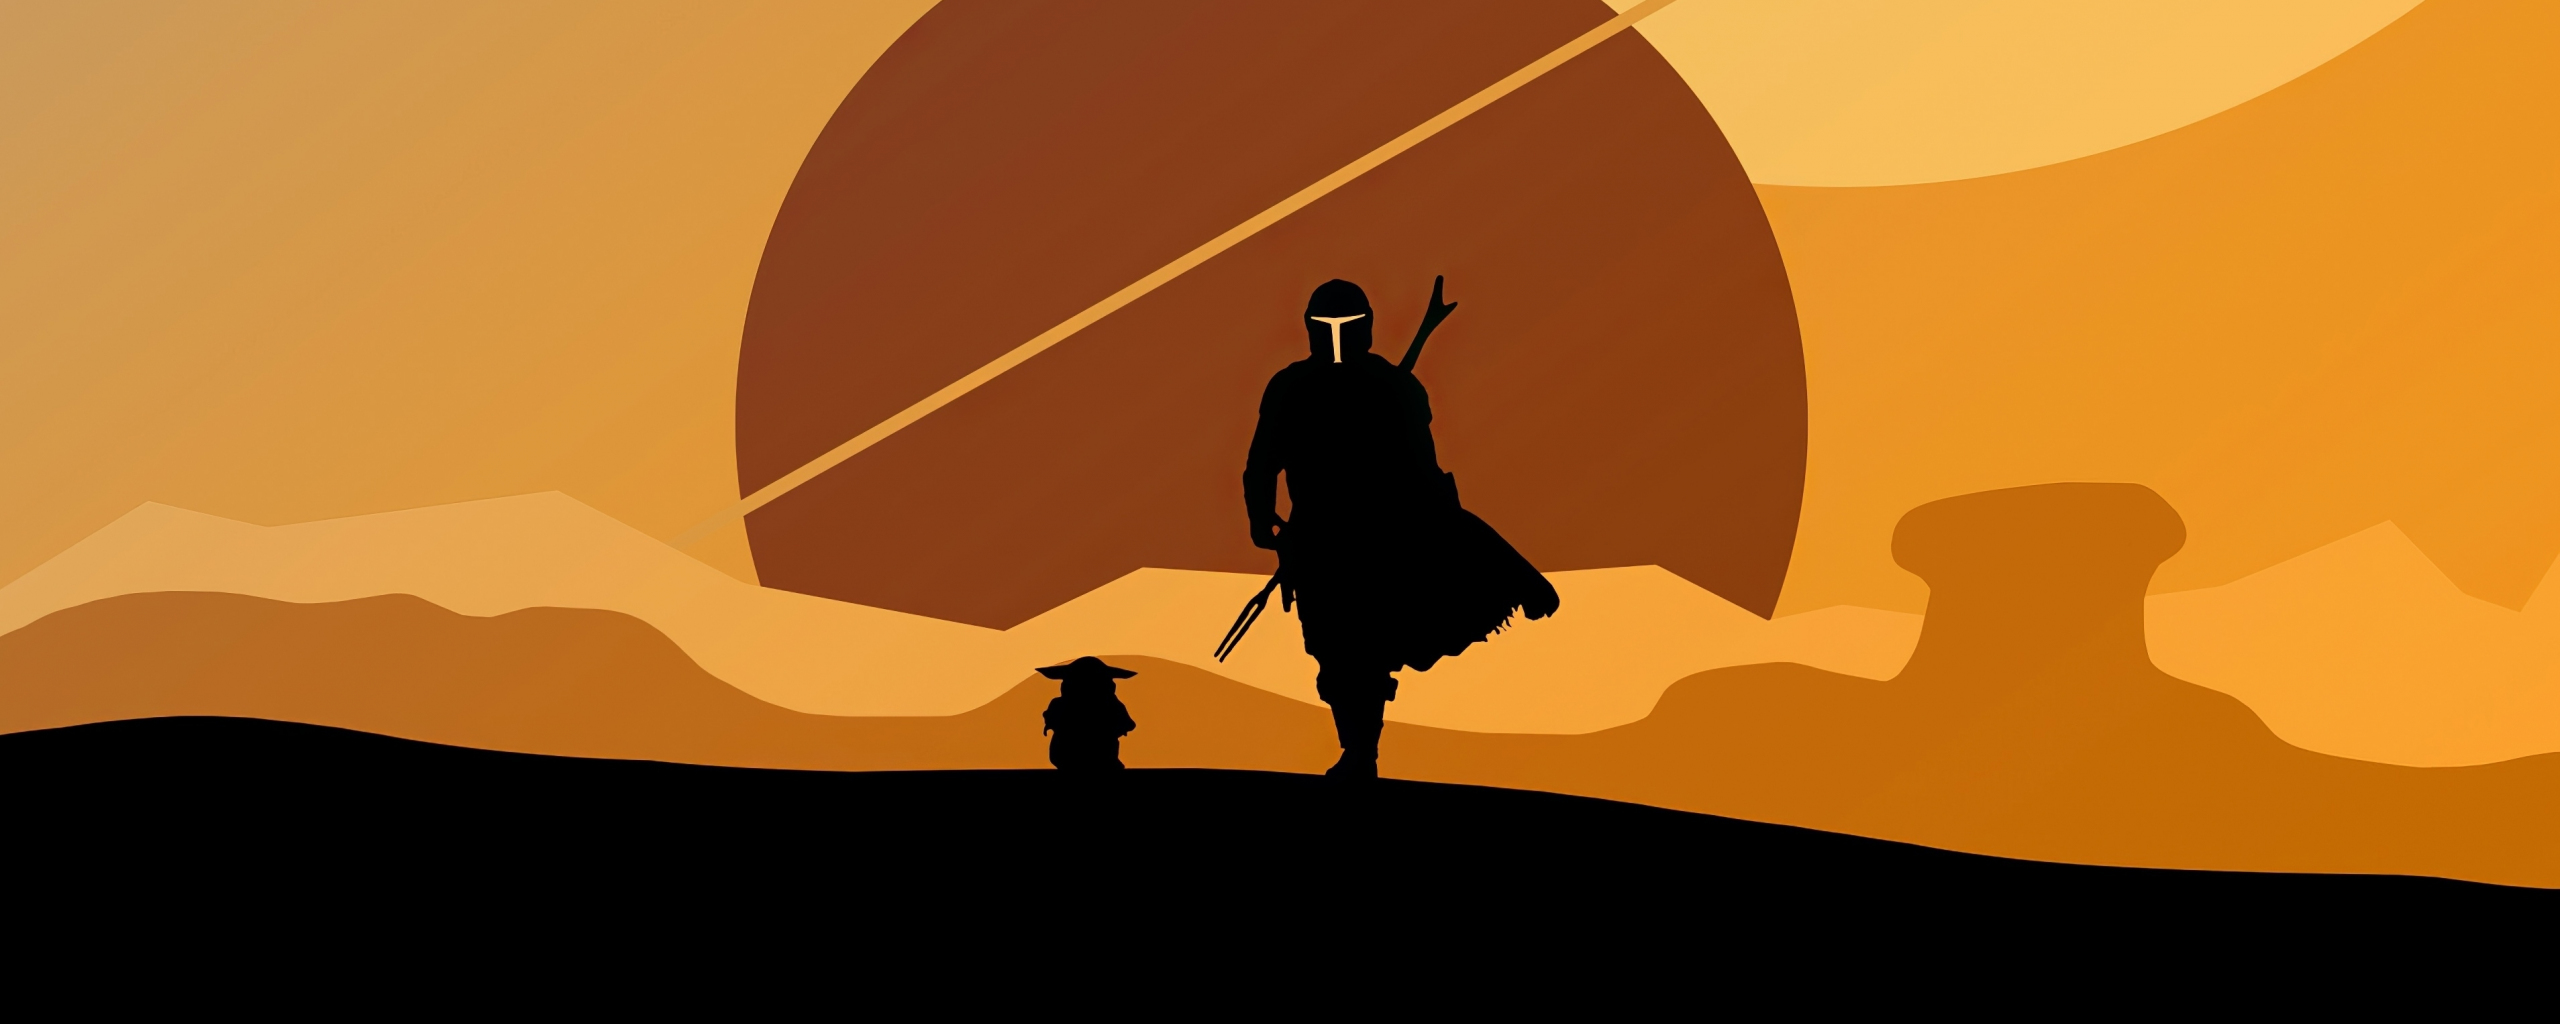 2020, The Mandalorian and Yoda, minimal, silhouette, artwork, 2560x1024 wallpaper